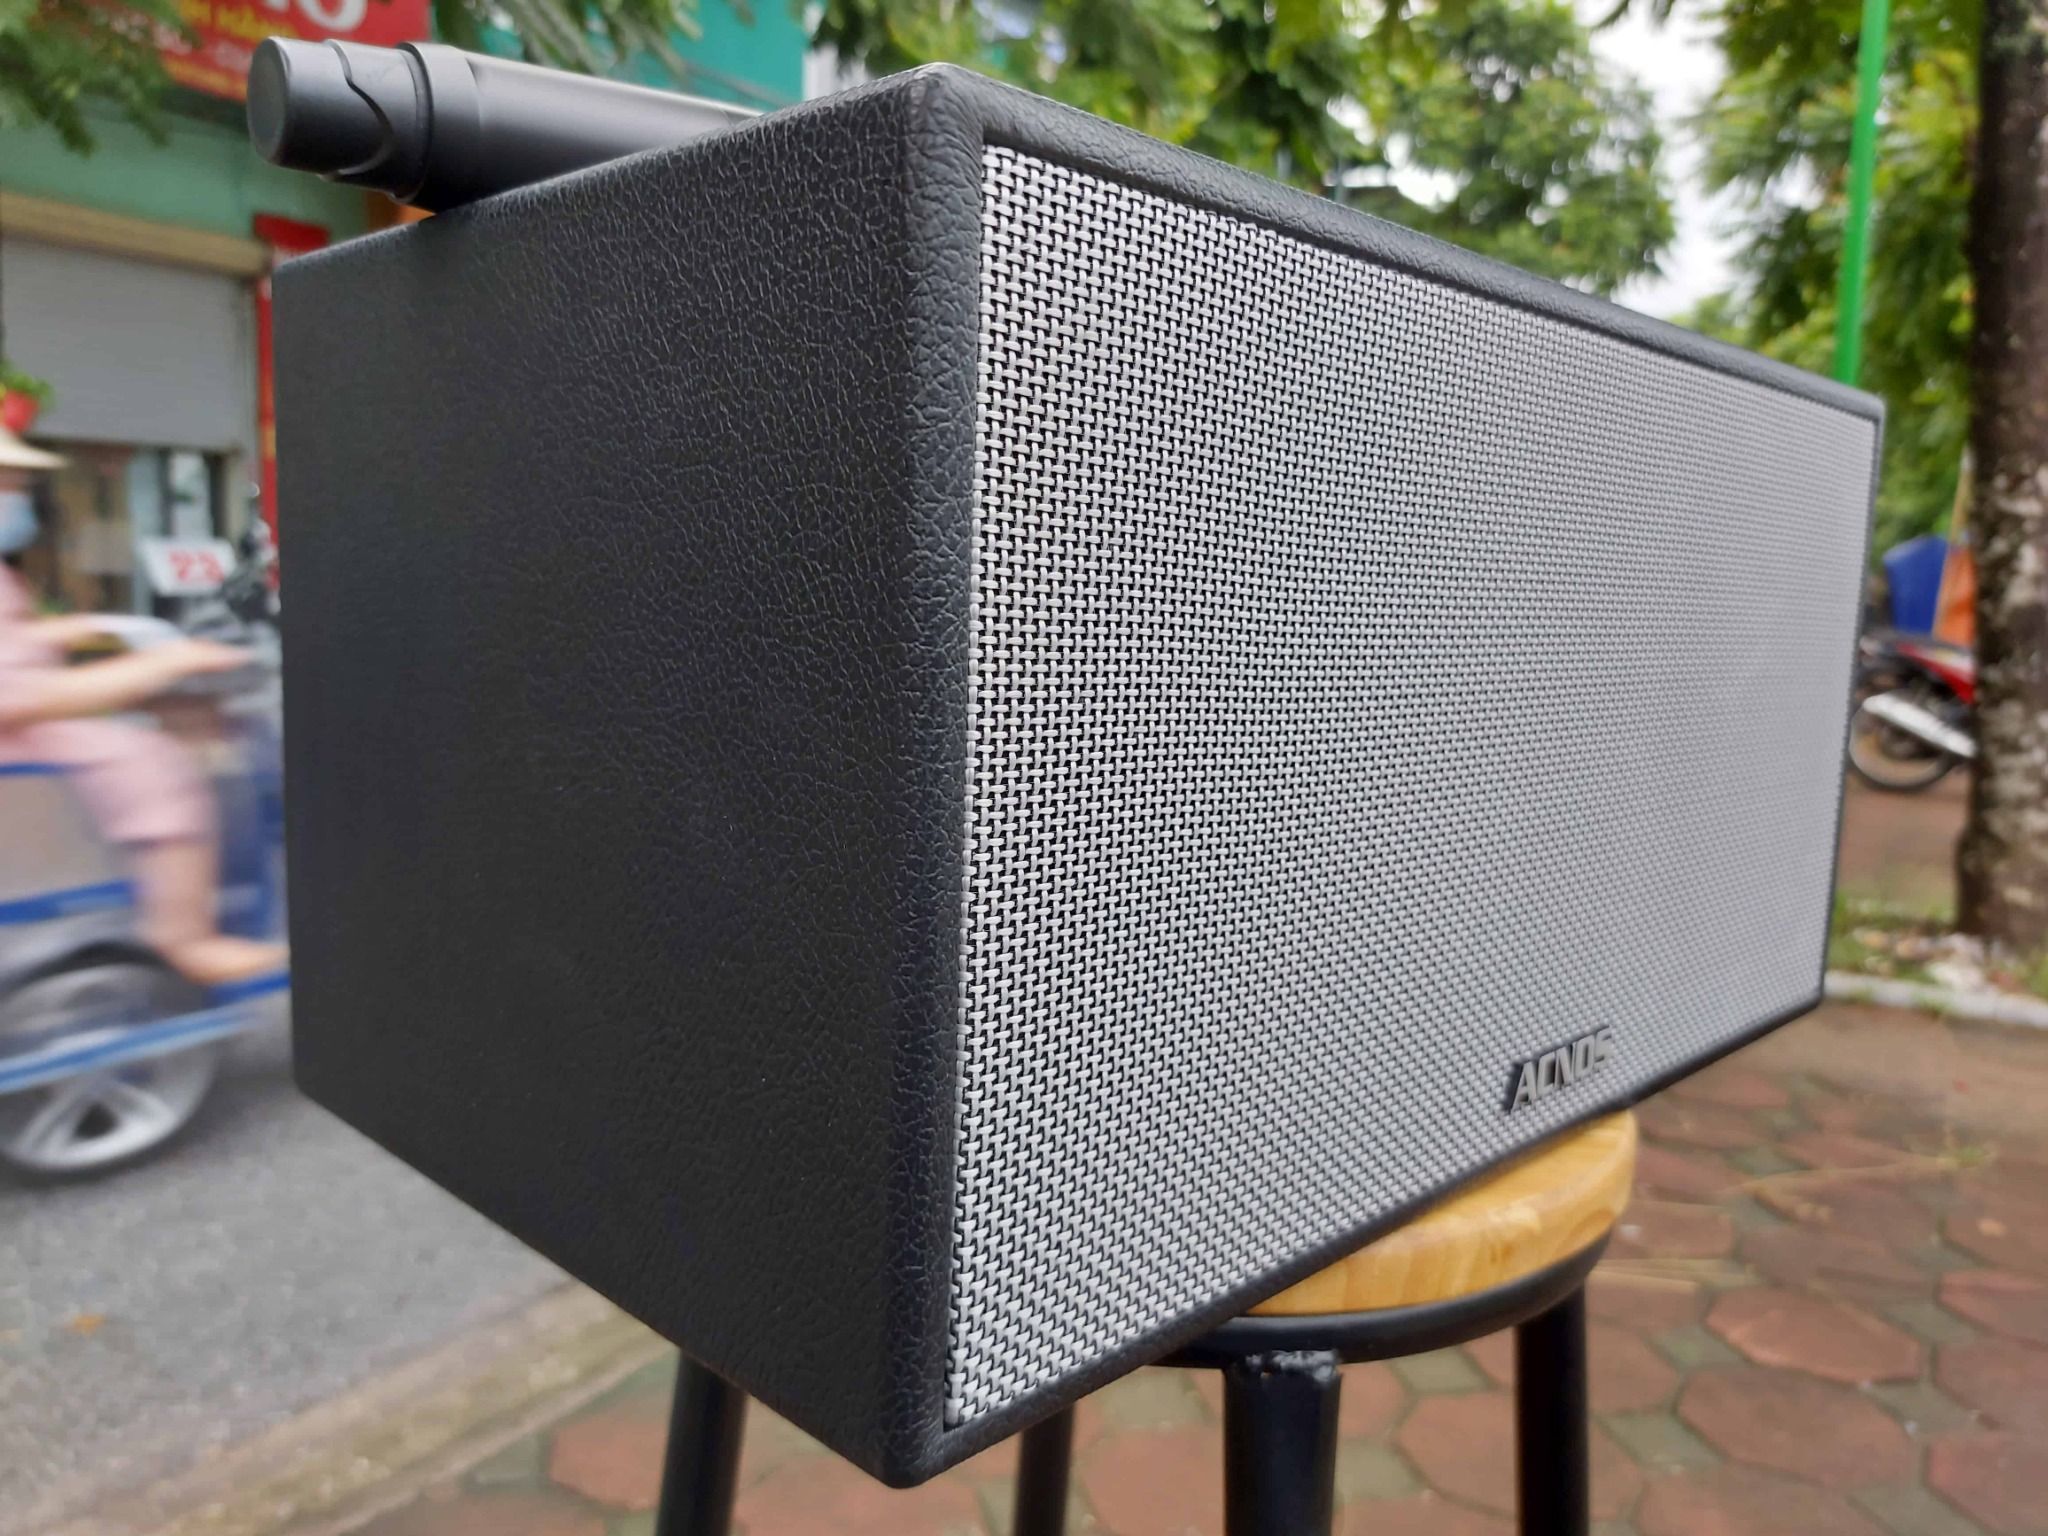  Loa Bluetooth Di Động Karaoke Acnos CS446 Boost Bass Vang Số 